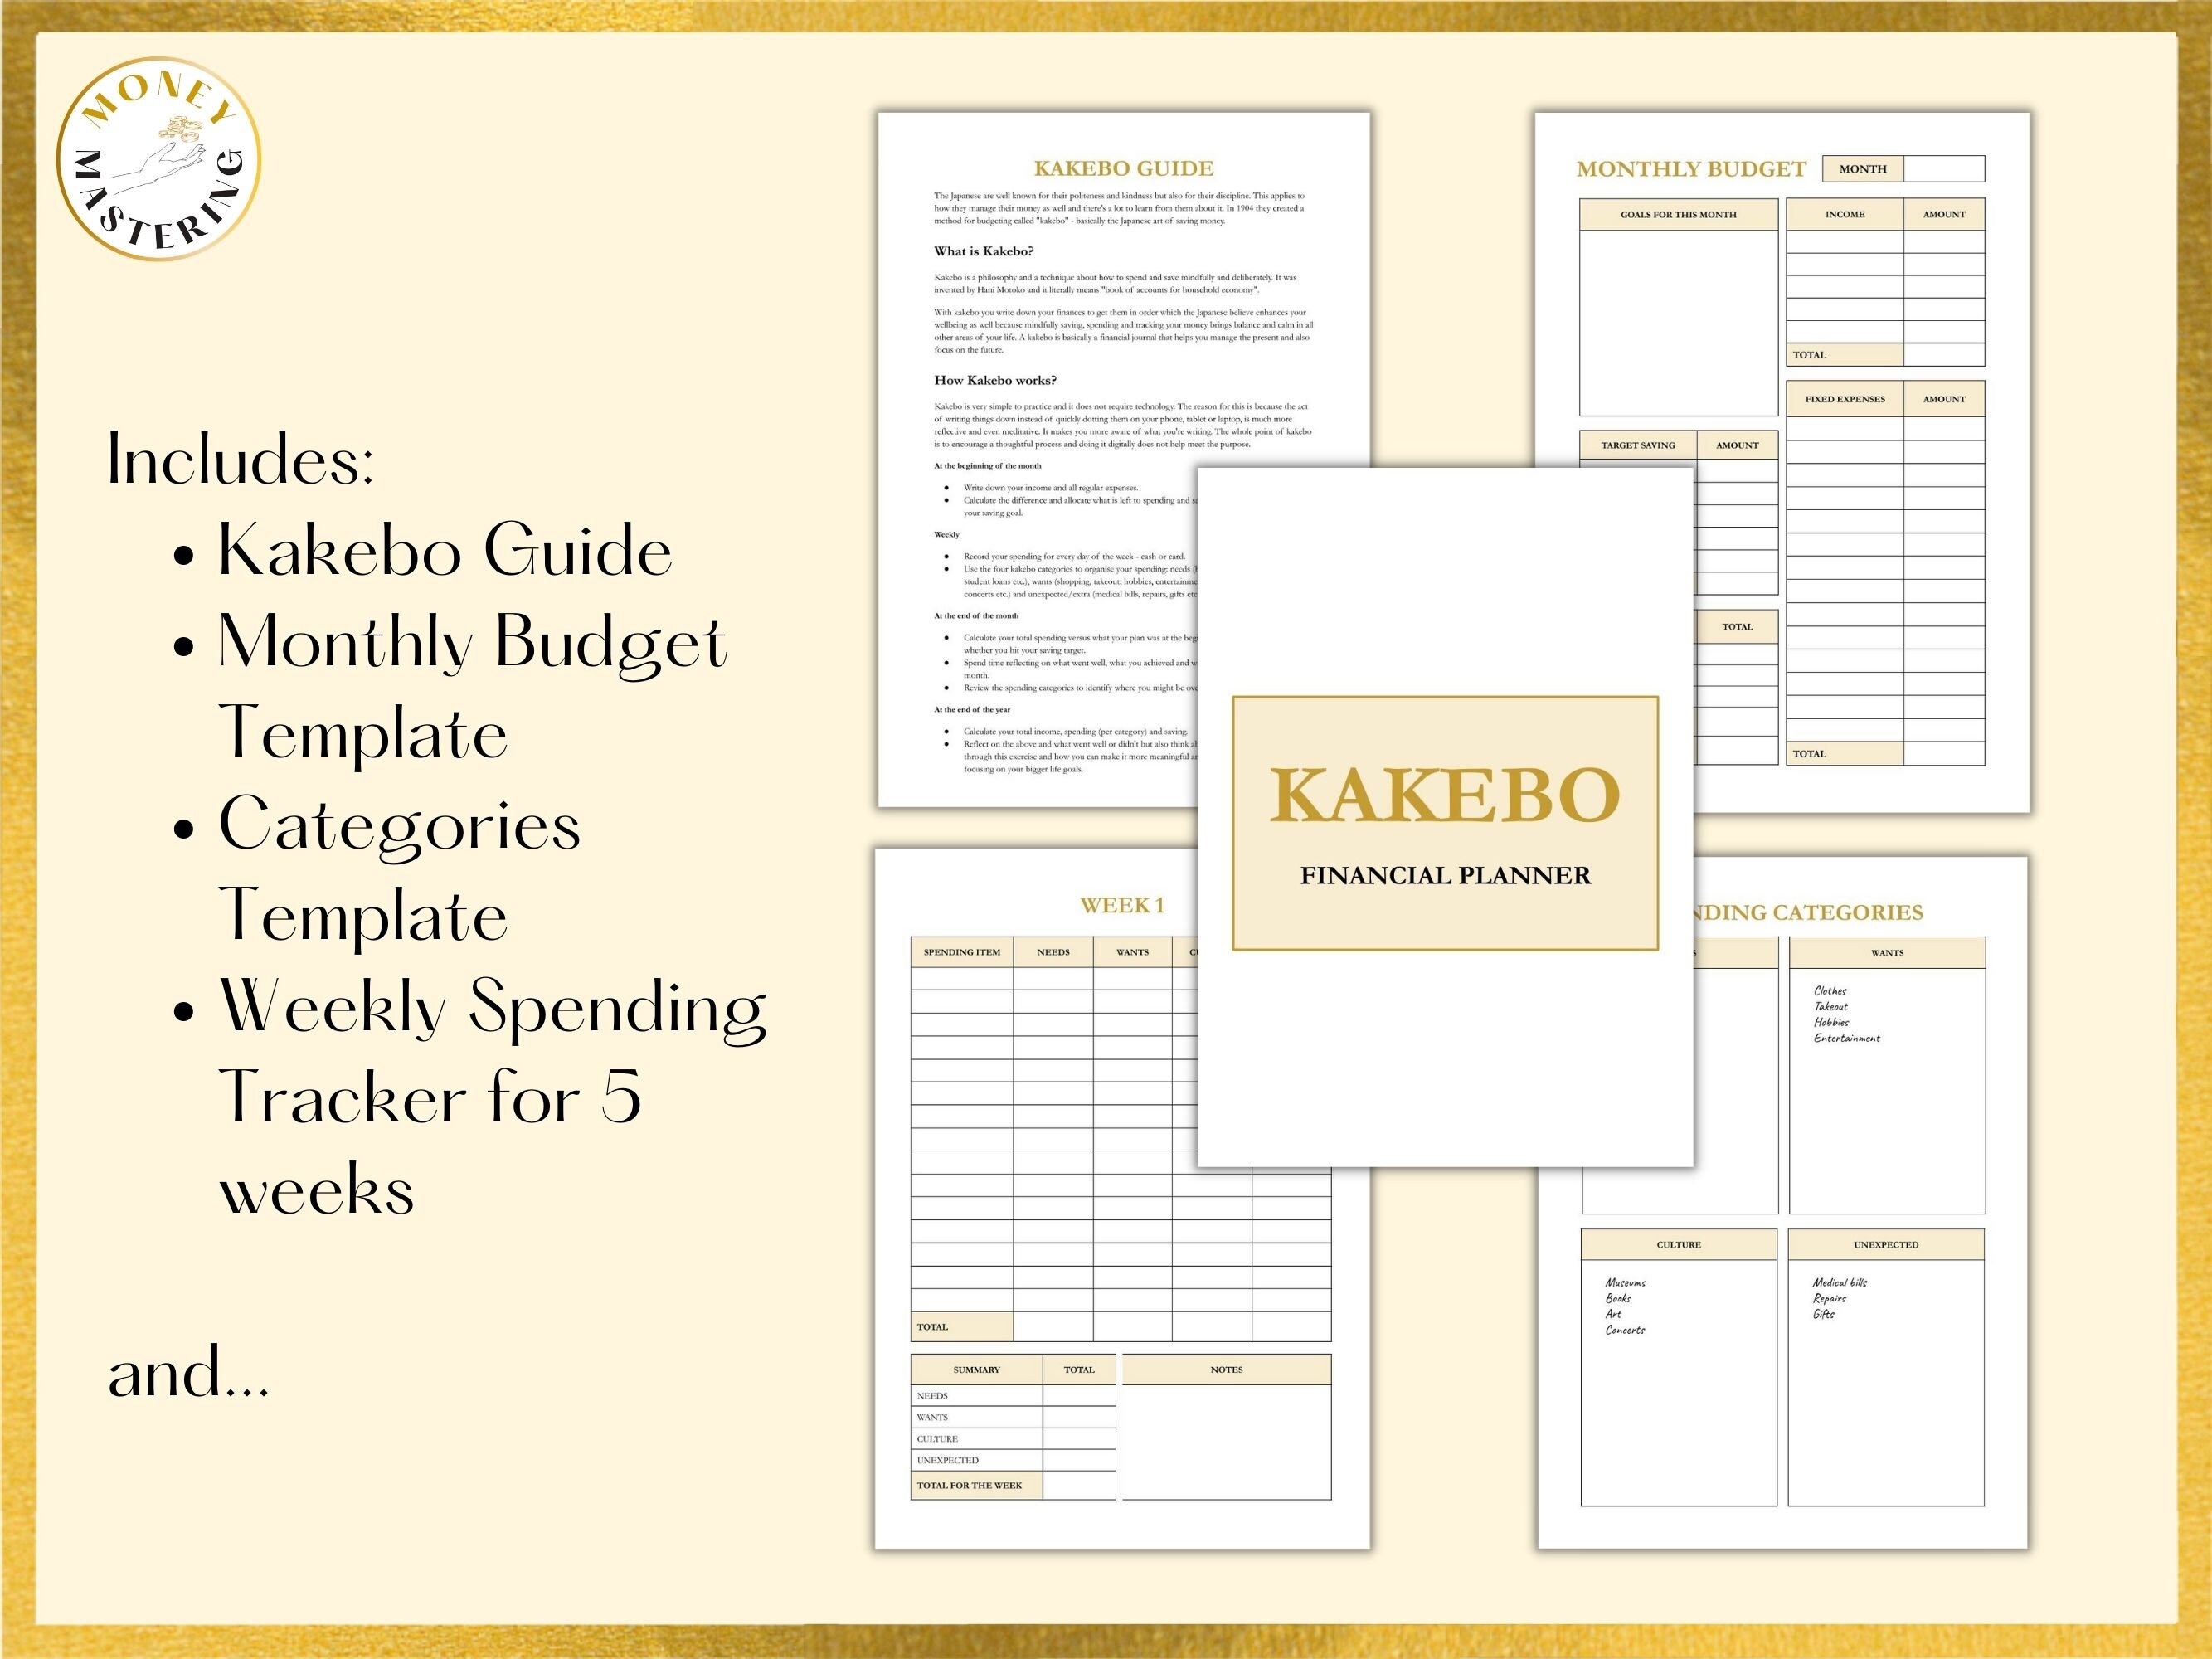 Kakebo Financial Planner Printable, Kakebo Budget Journal, Kakebo